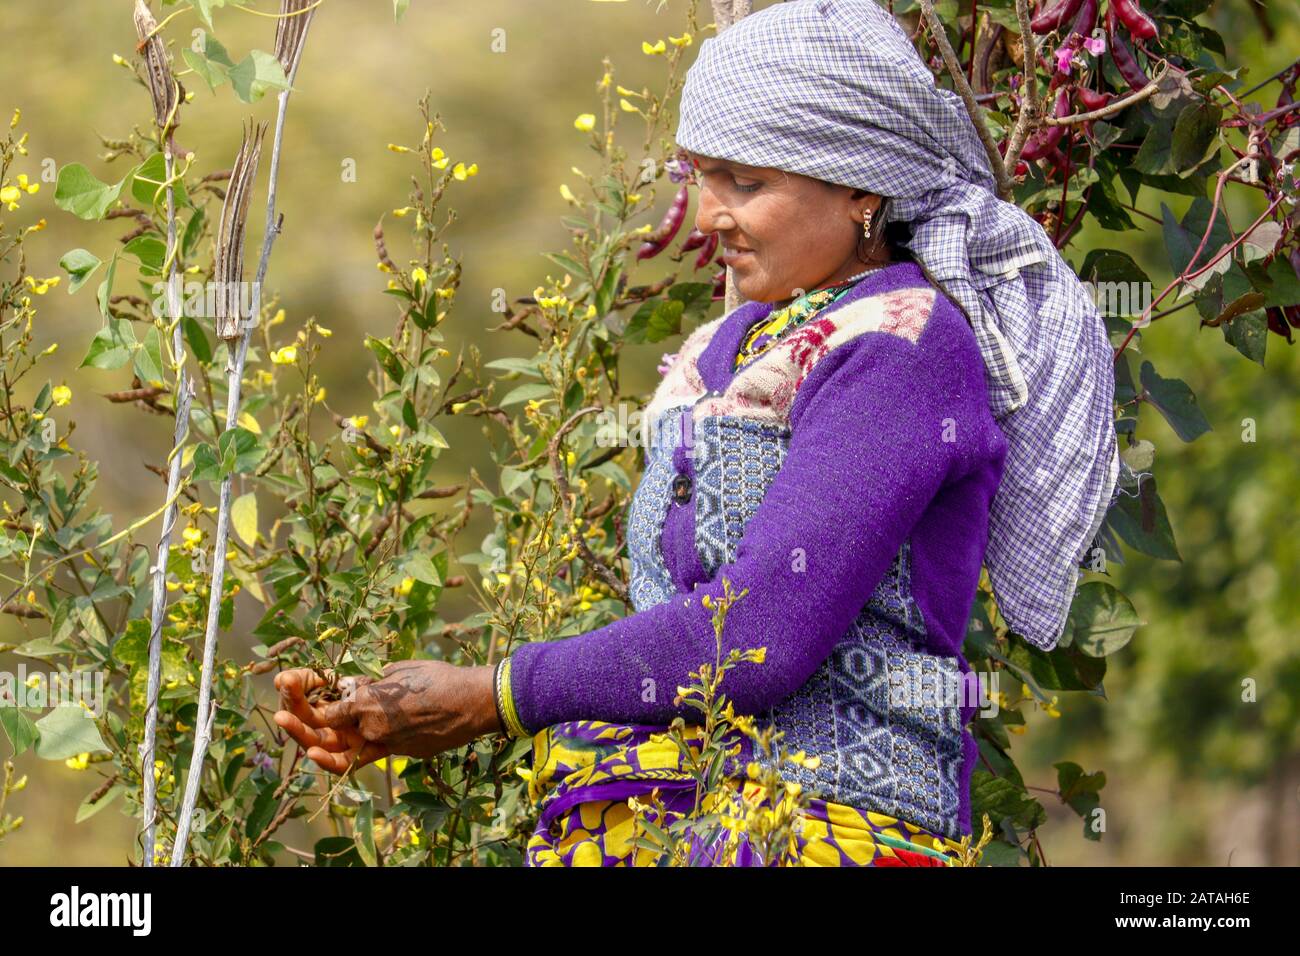 Mawai India Jan 28. 2020 : rural woman harvesting pigeon pea in garden. Stock Photo